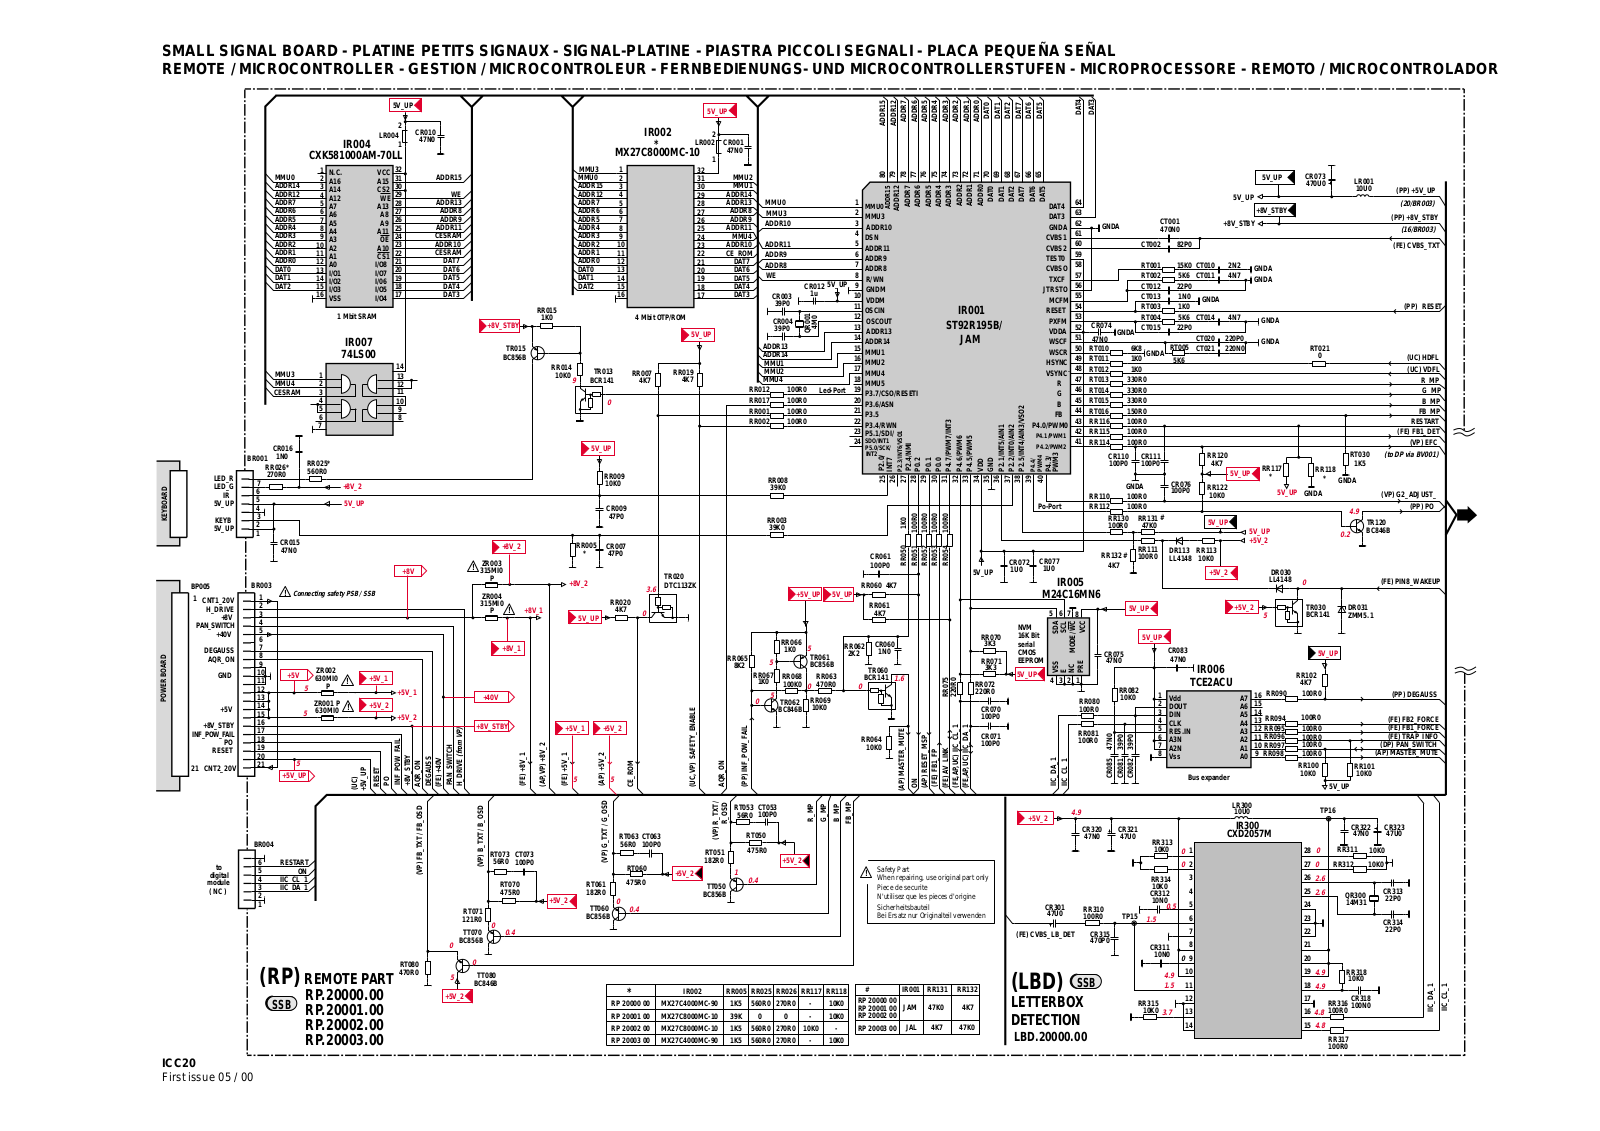 Thomson icc20 schematic